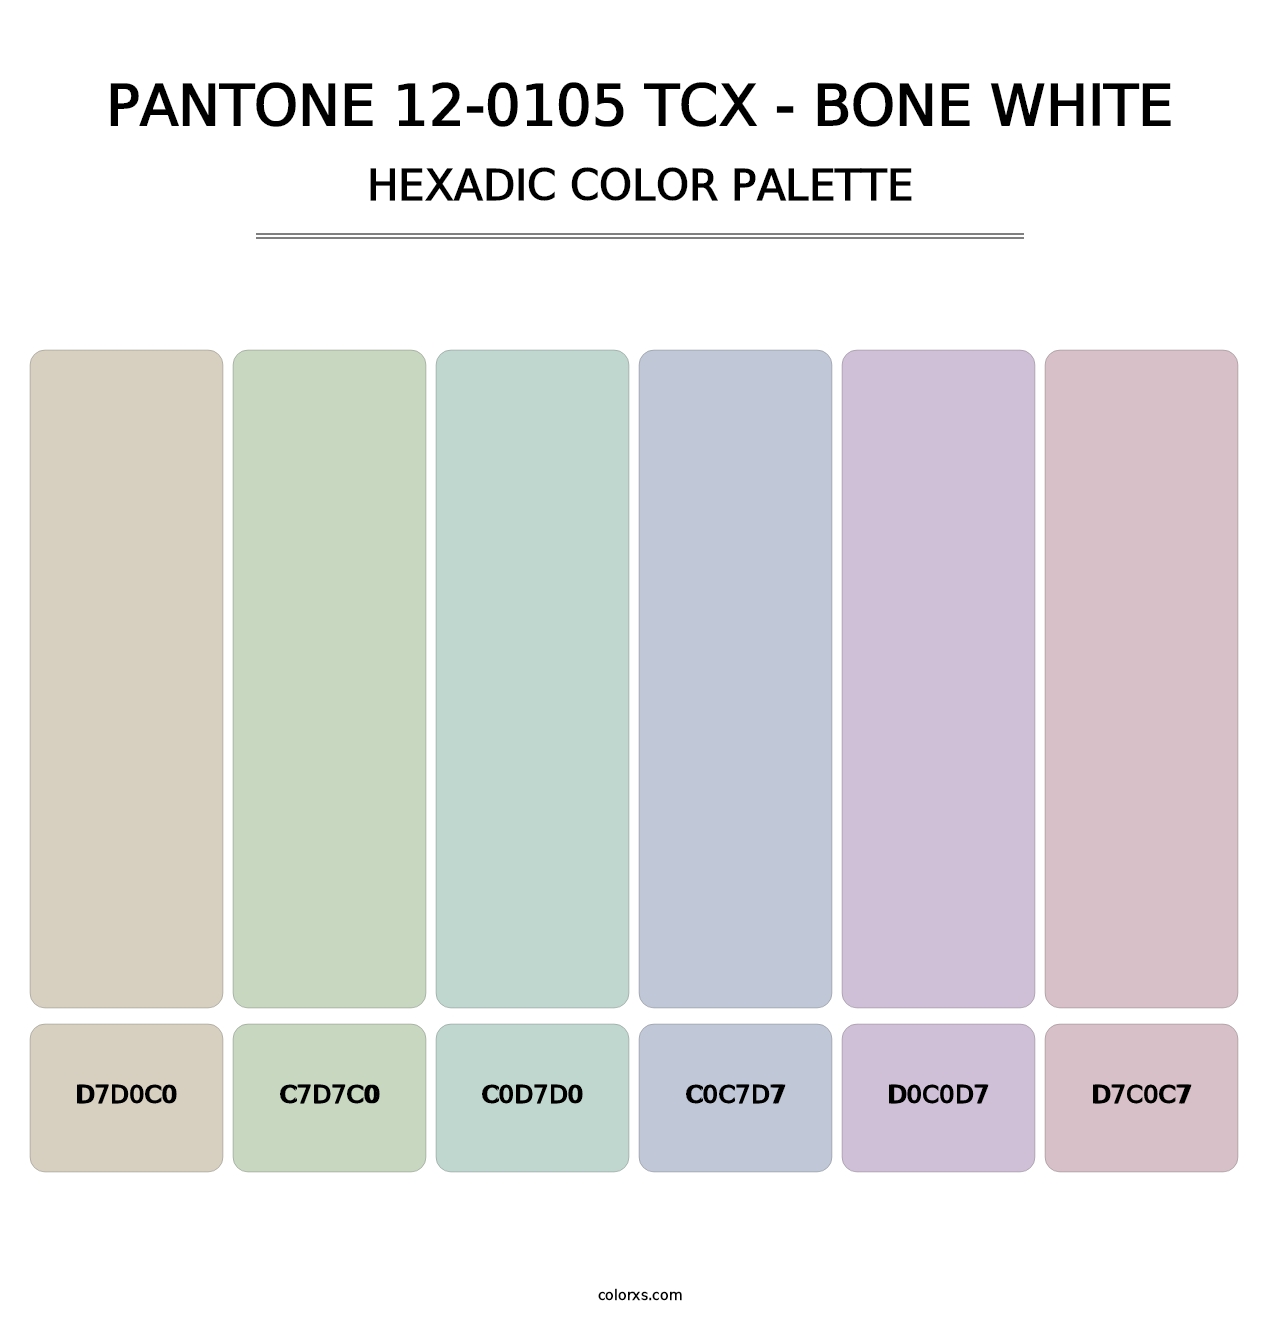 PANTONE 12-0105 TCX - Bone White - Hexadic Color Palette